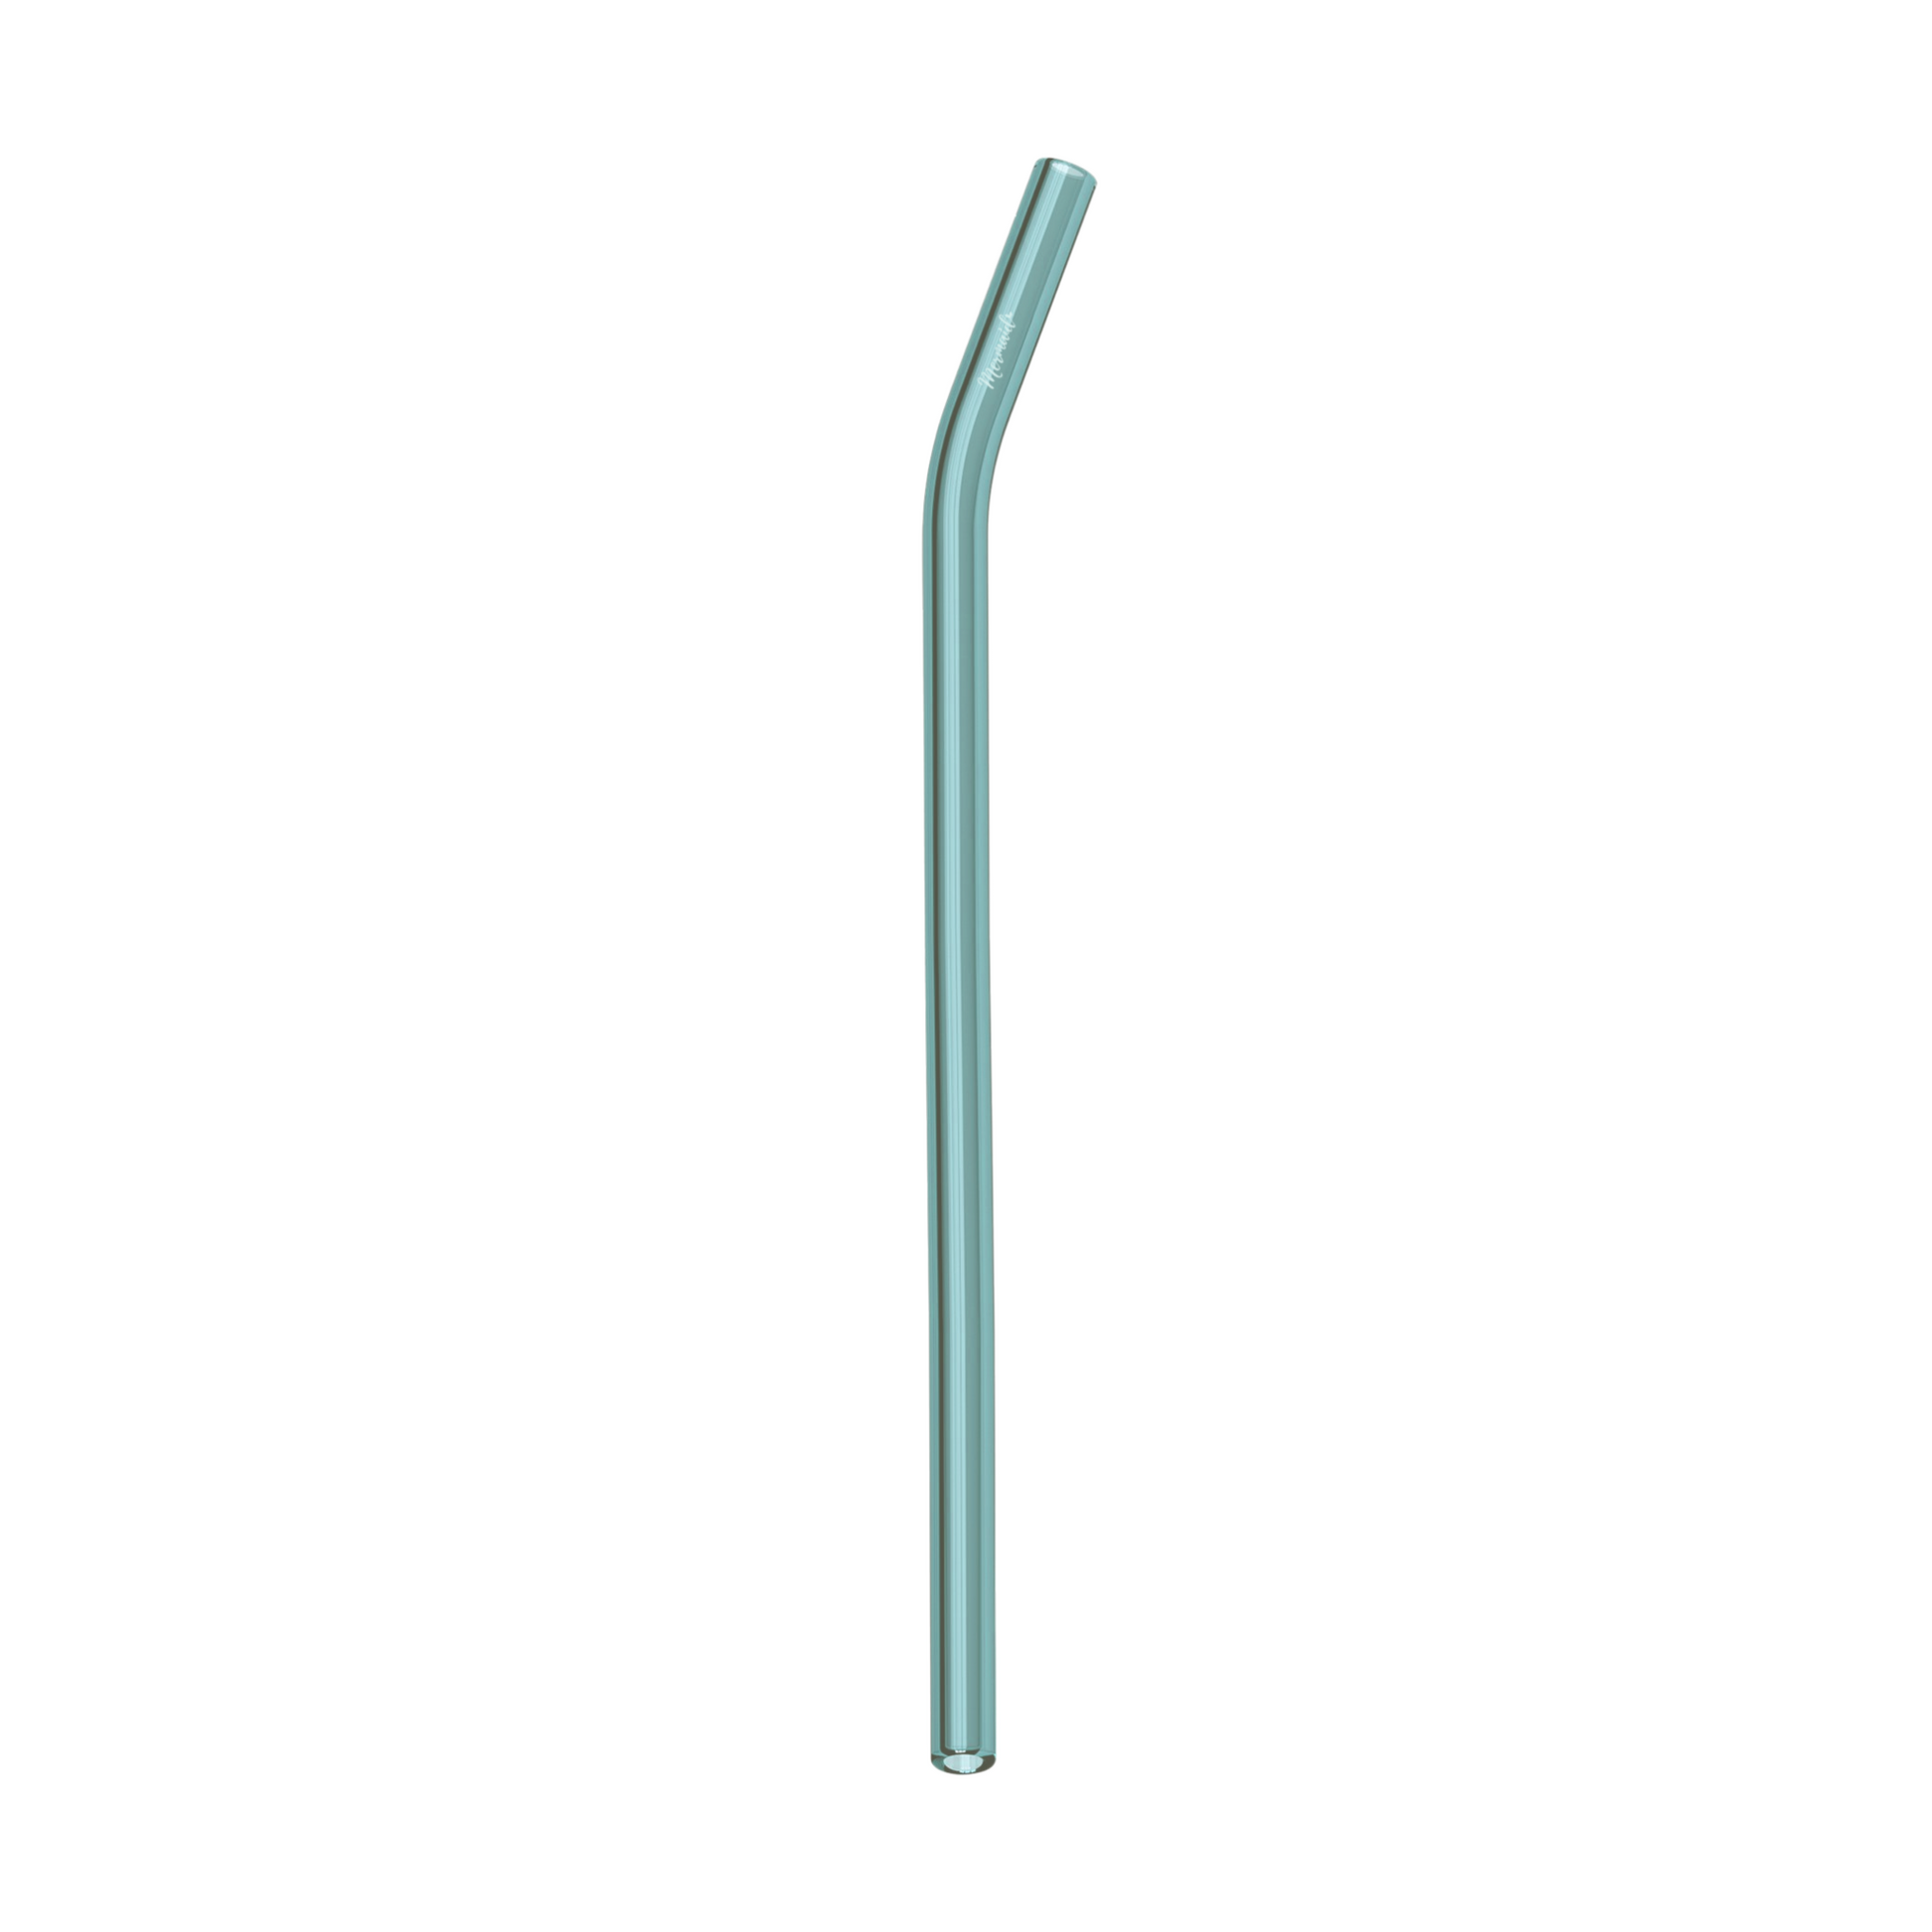 Reusable Straws Glass Straw: Glass Reusable Bent Clear Straws Long